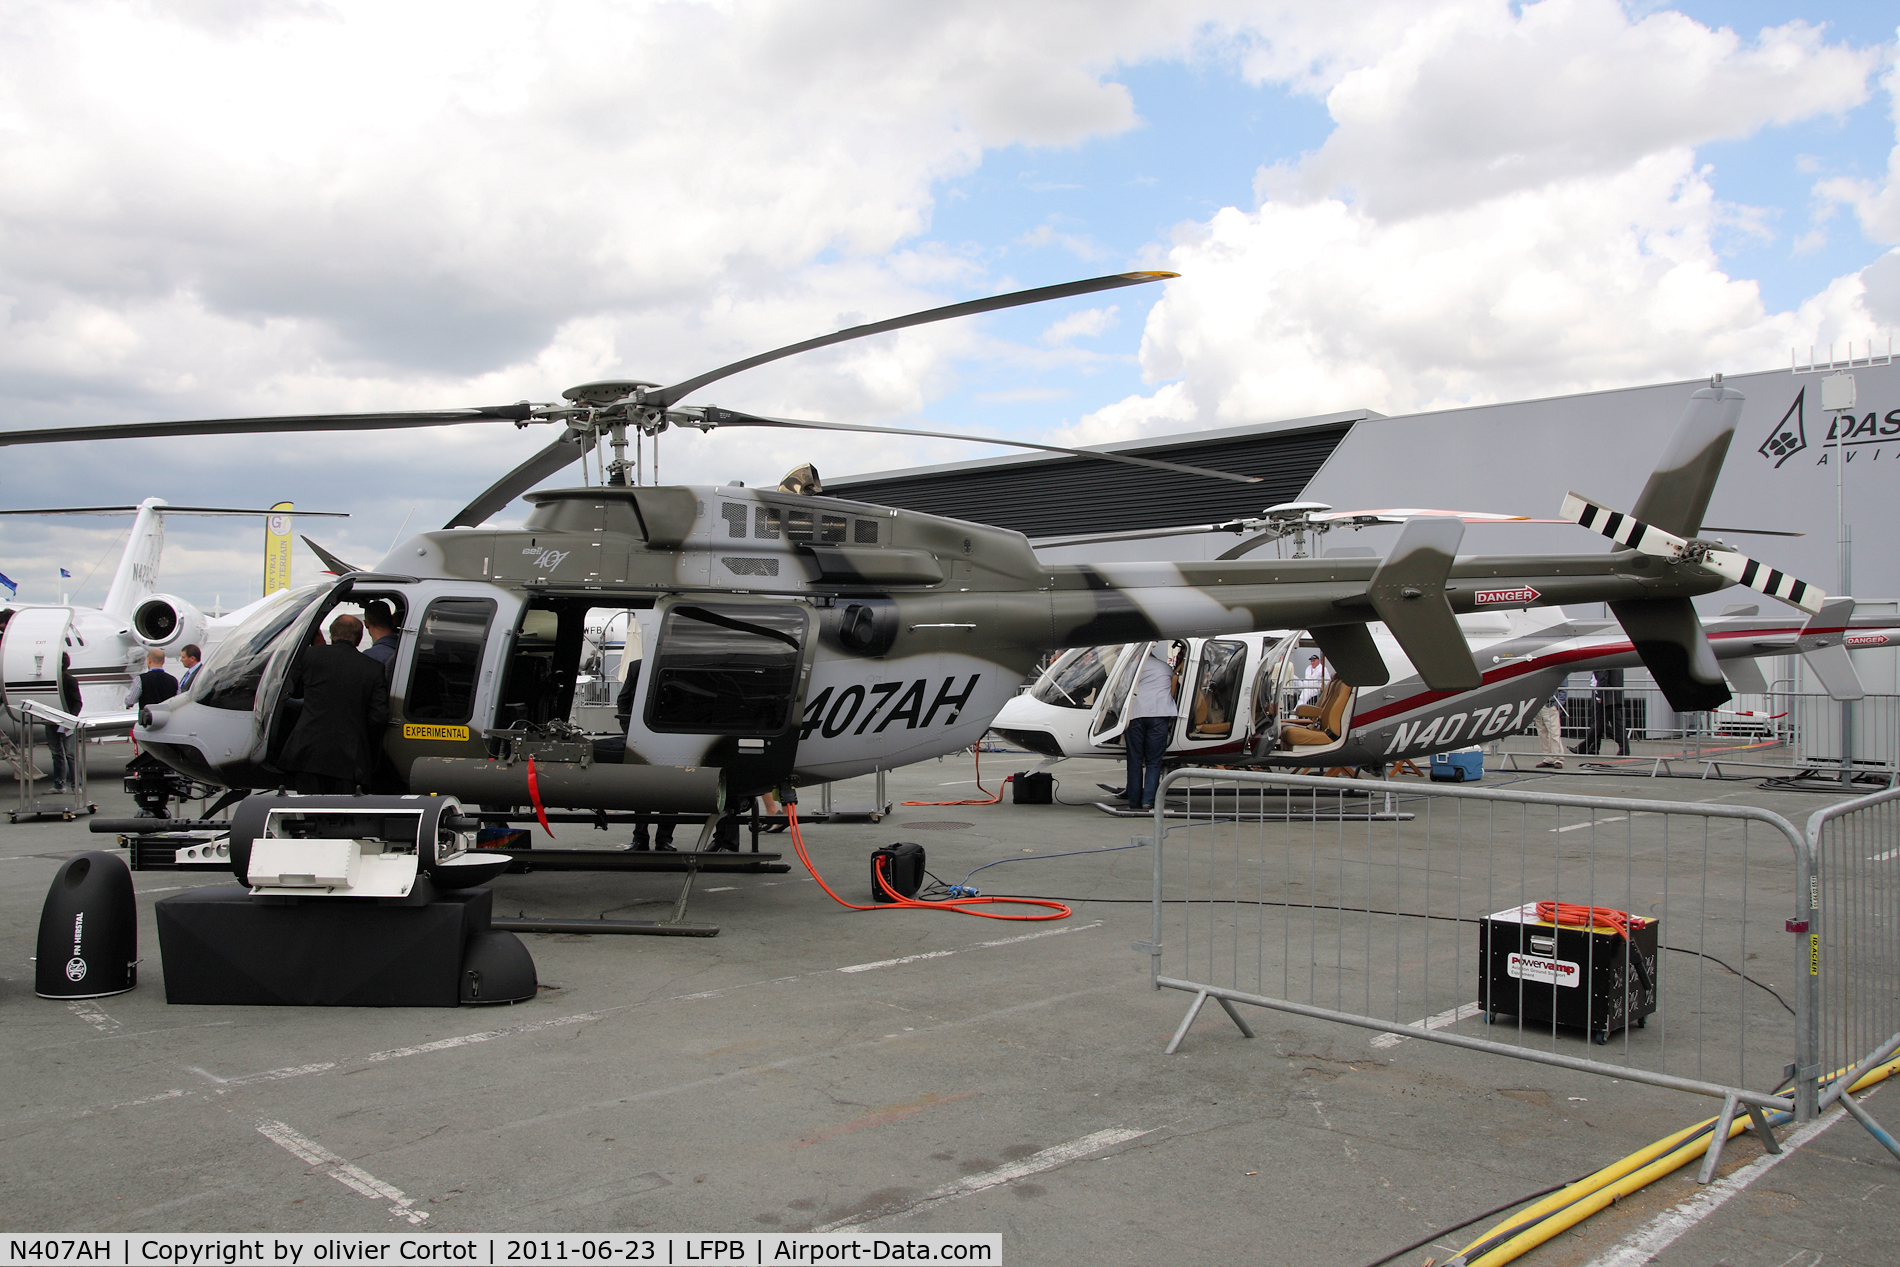 Aircraft N407AH (2010 Bell 407 C N 53989) Photo By Olivier Cortot (Photo ID: AC633051)